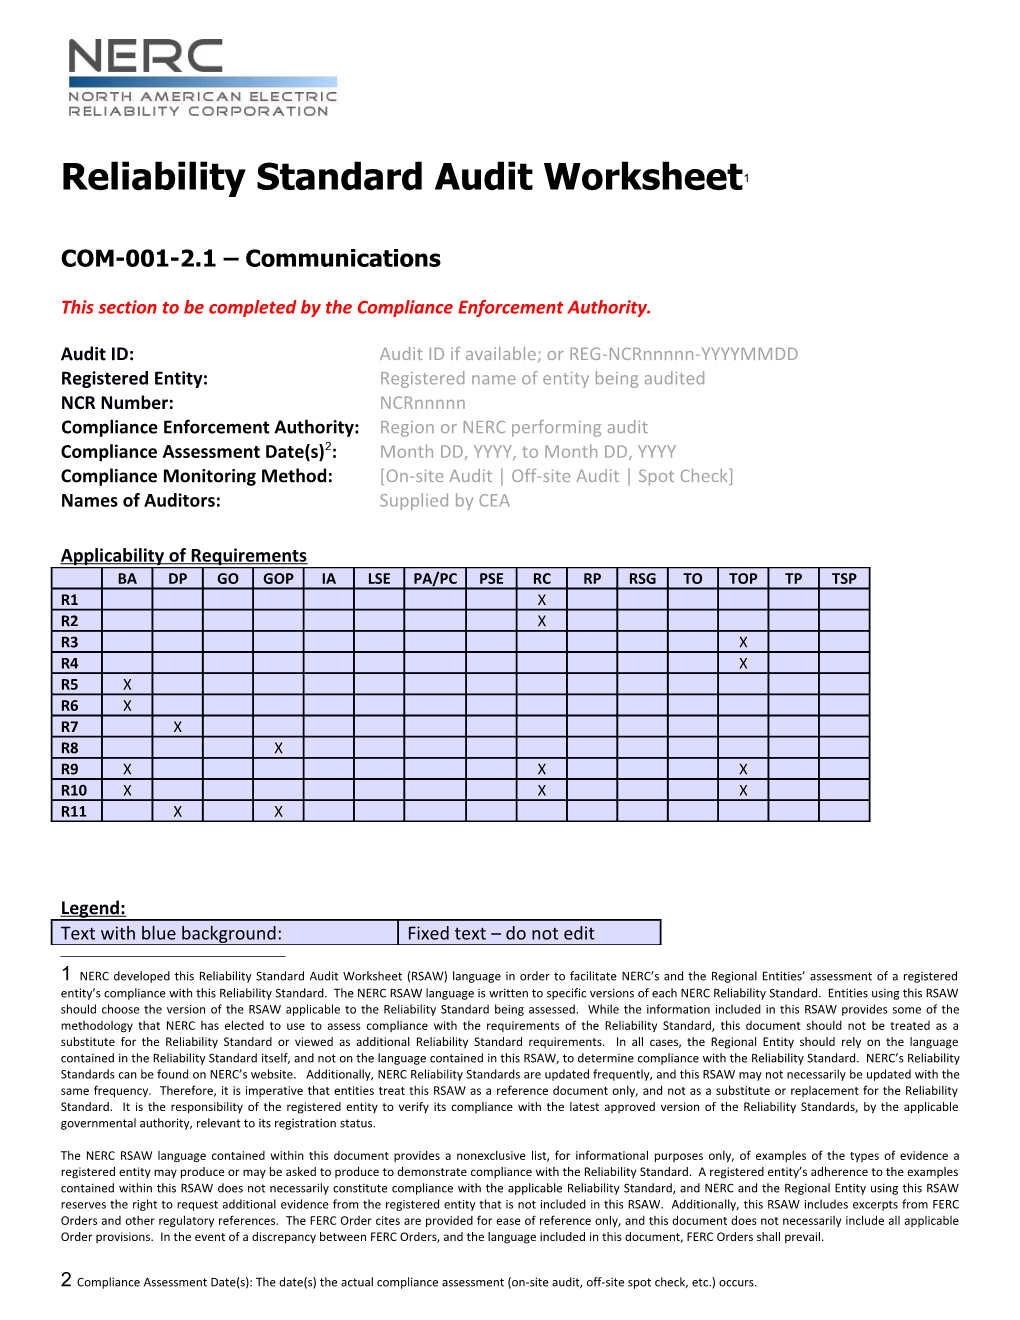 NERC Reliability Standard Audit Worksheet